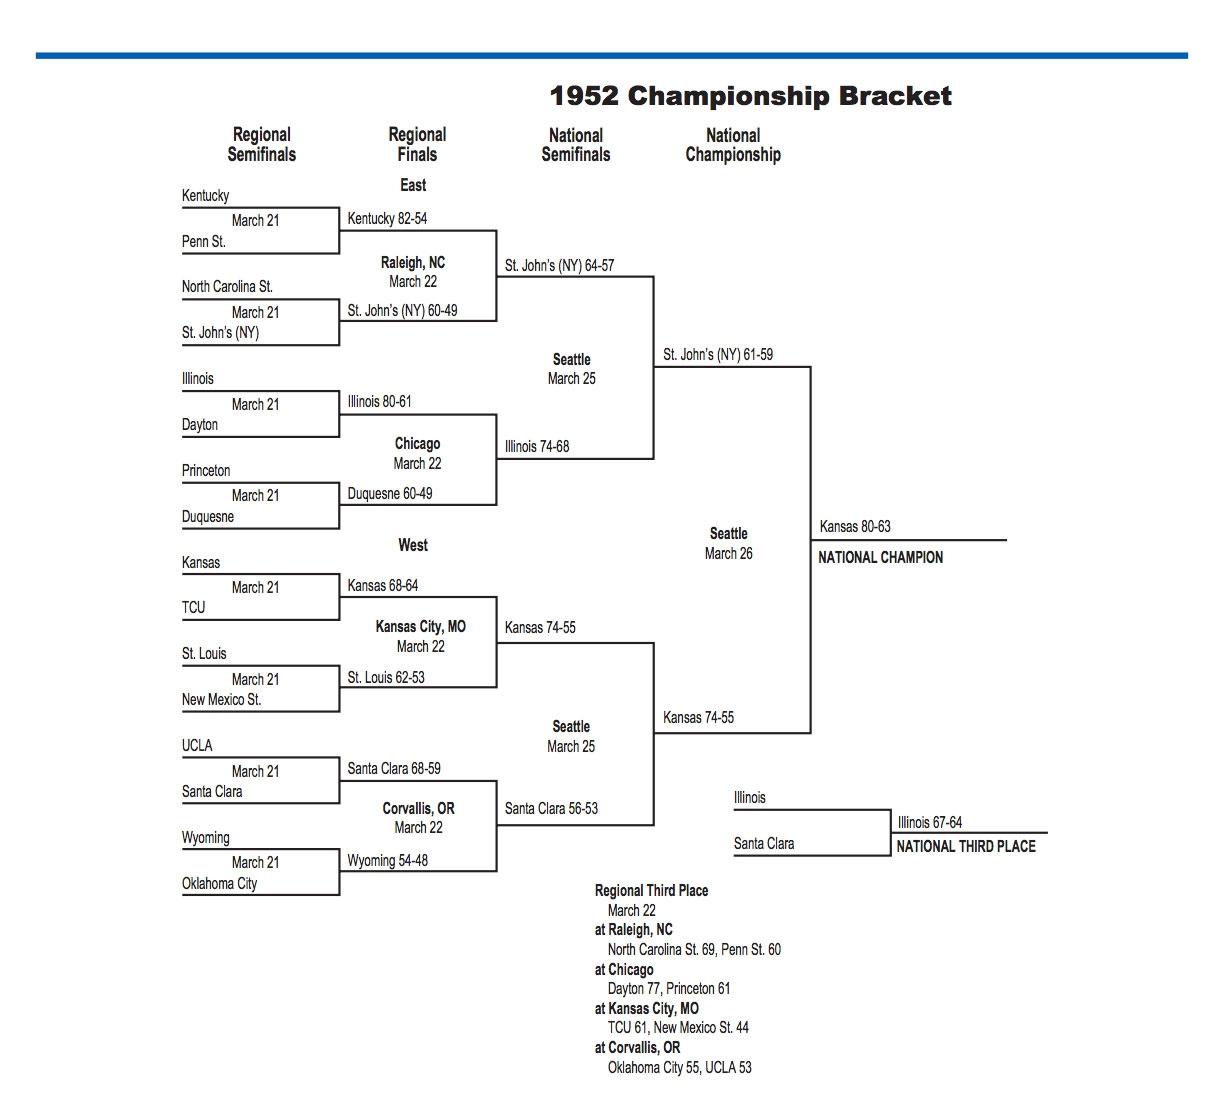 Here is the 1952 NCAA tournament bracket